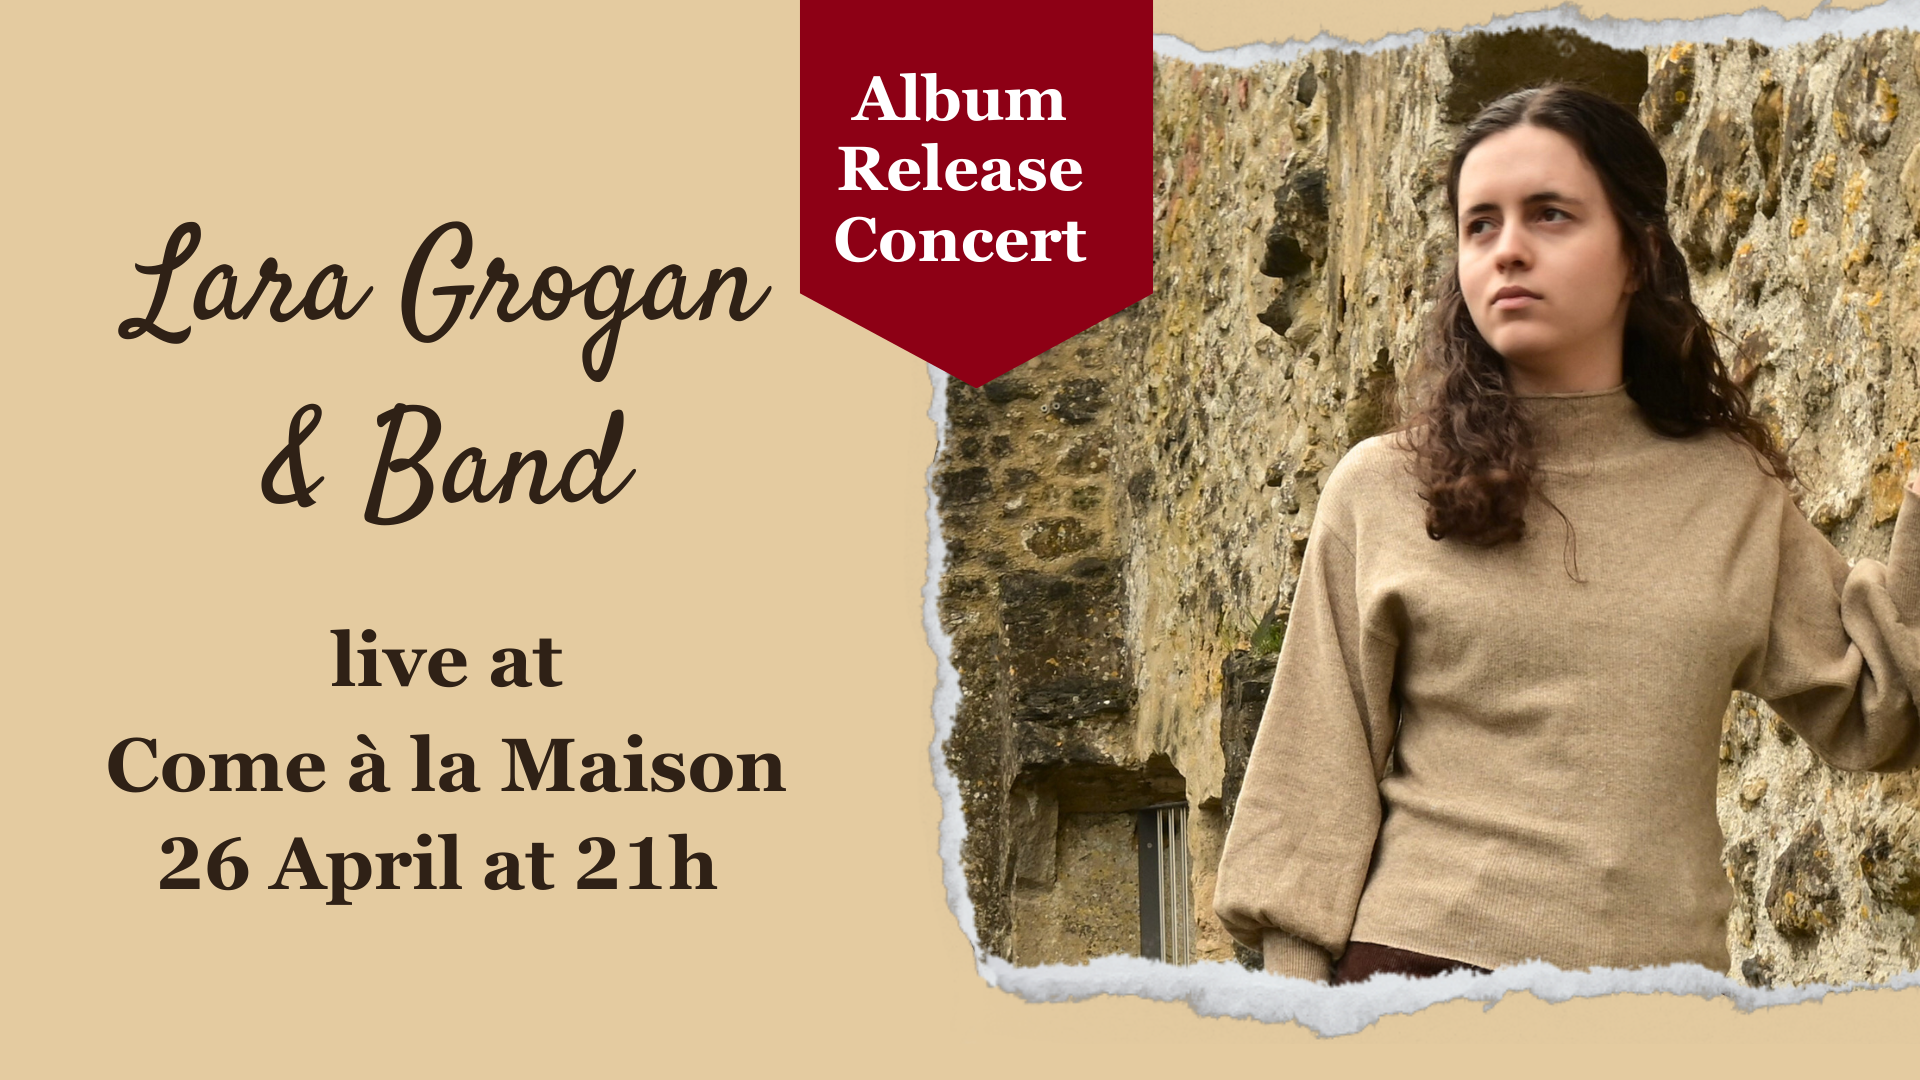 Lara Grogan & Band (Album Release Concert)